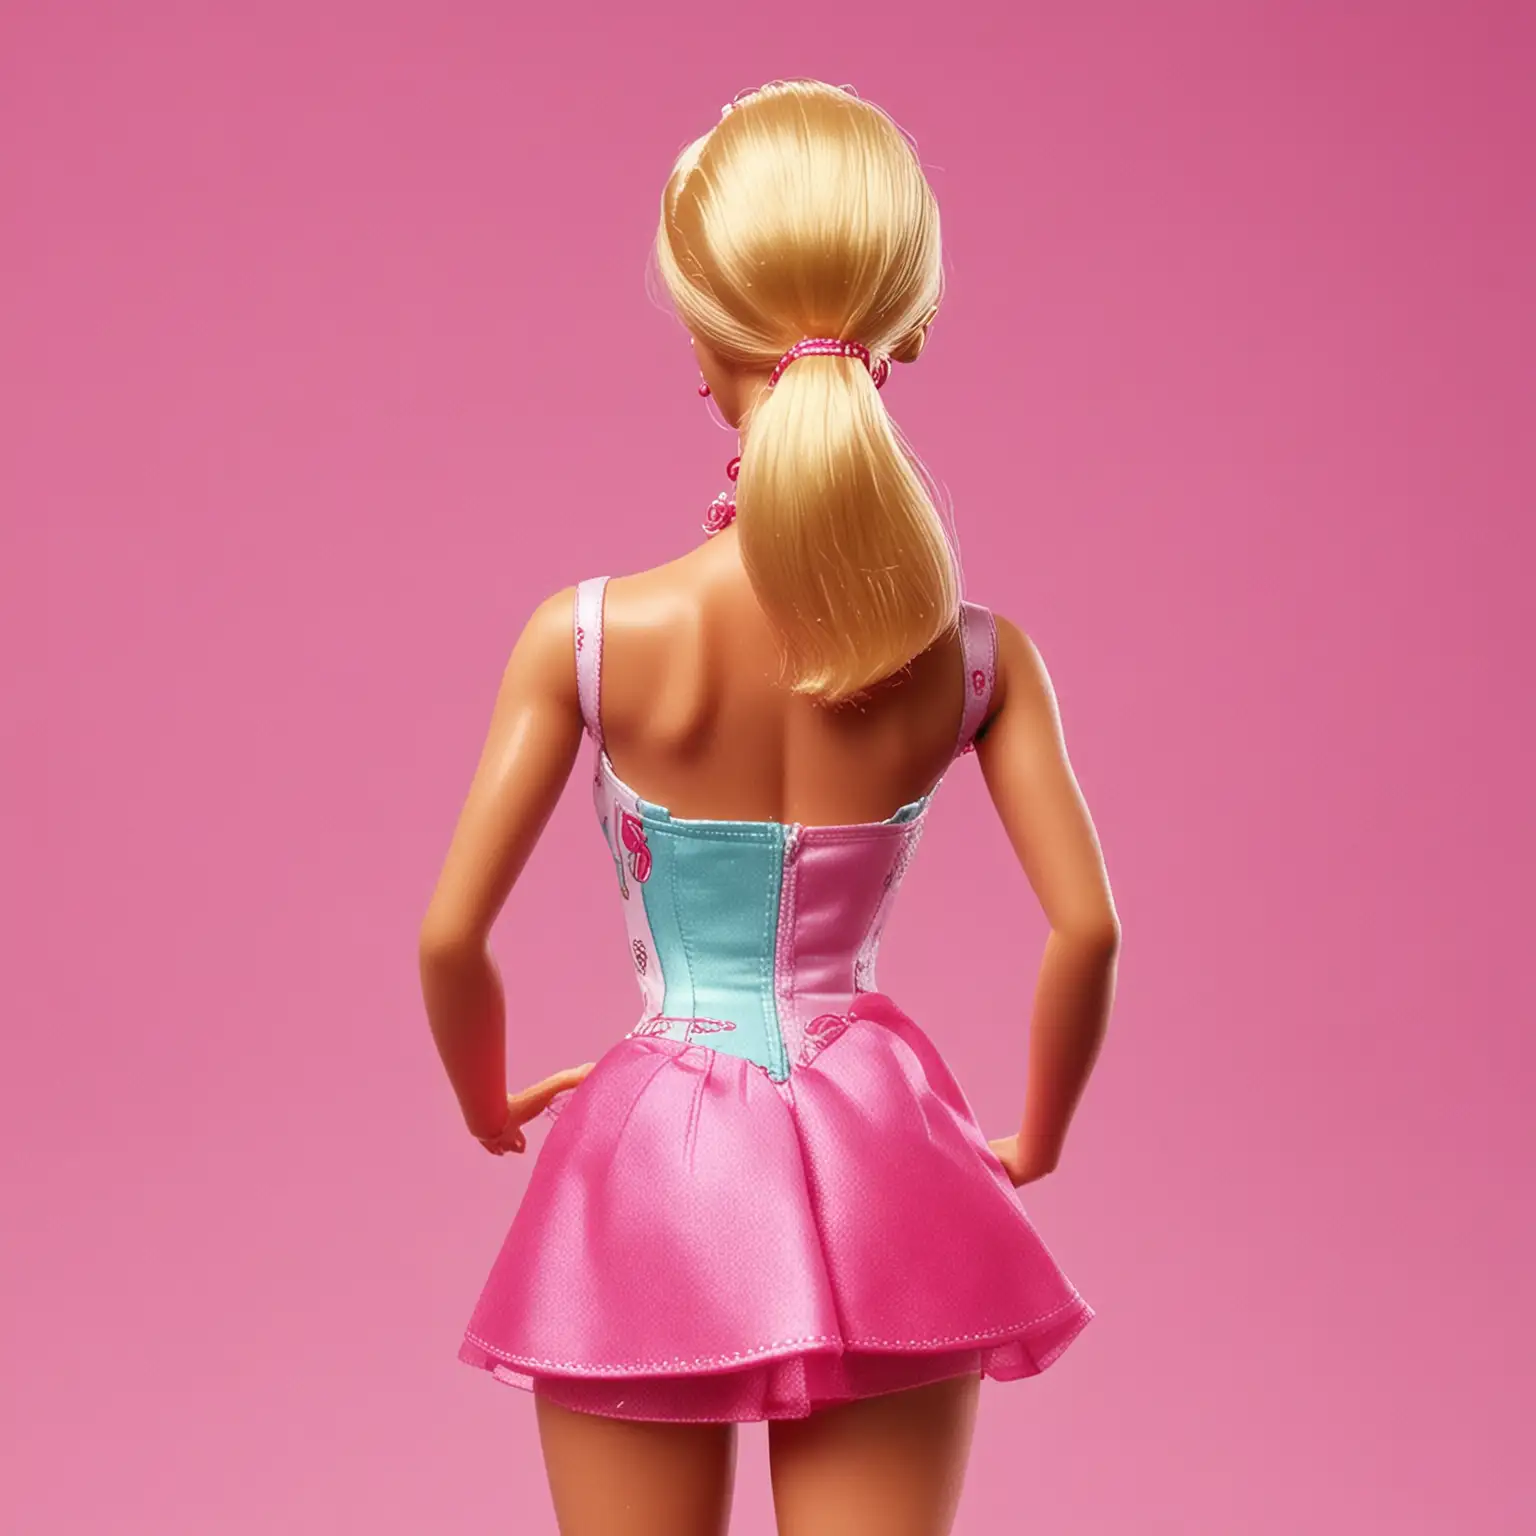 Elegant Barbie Doll with Flowing Hair Seen from Behind